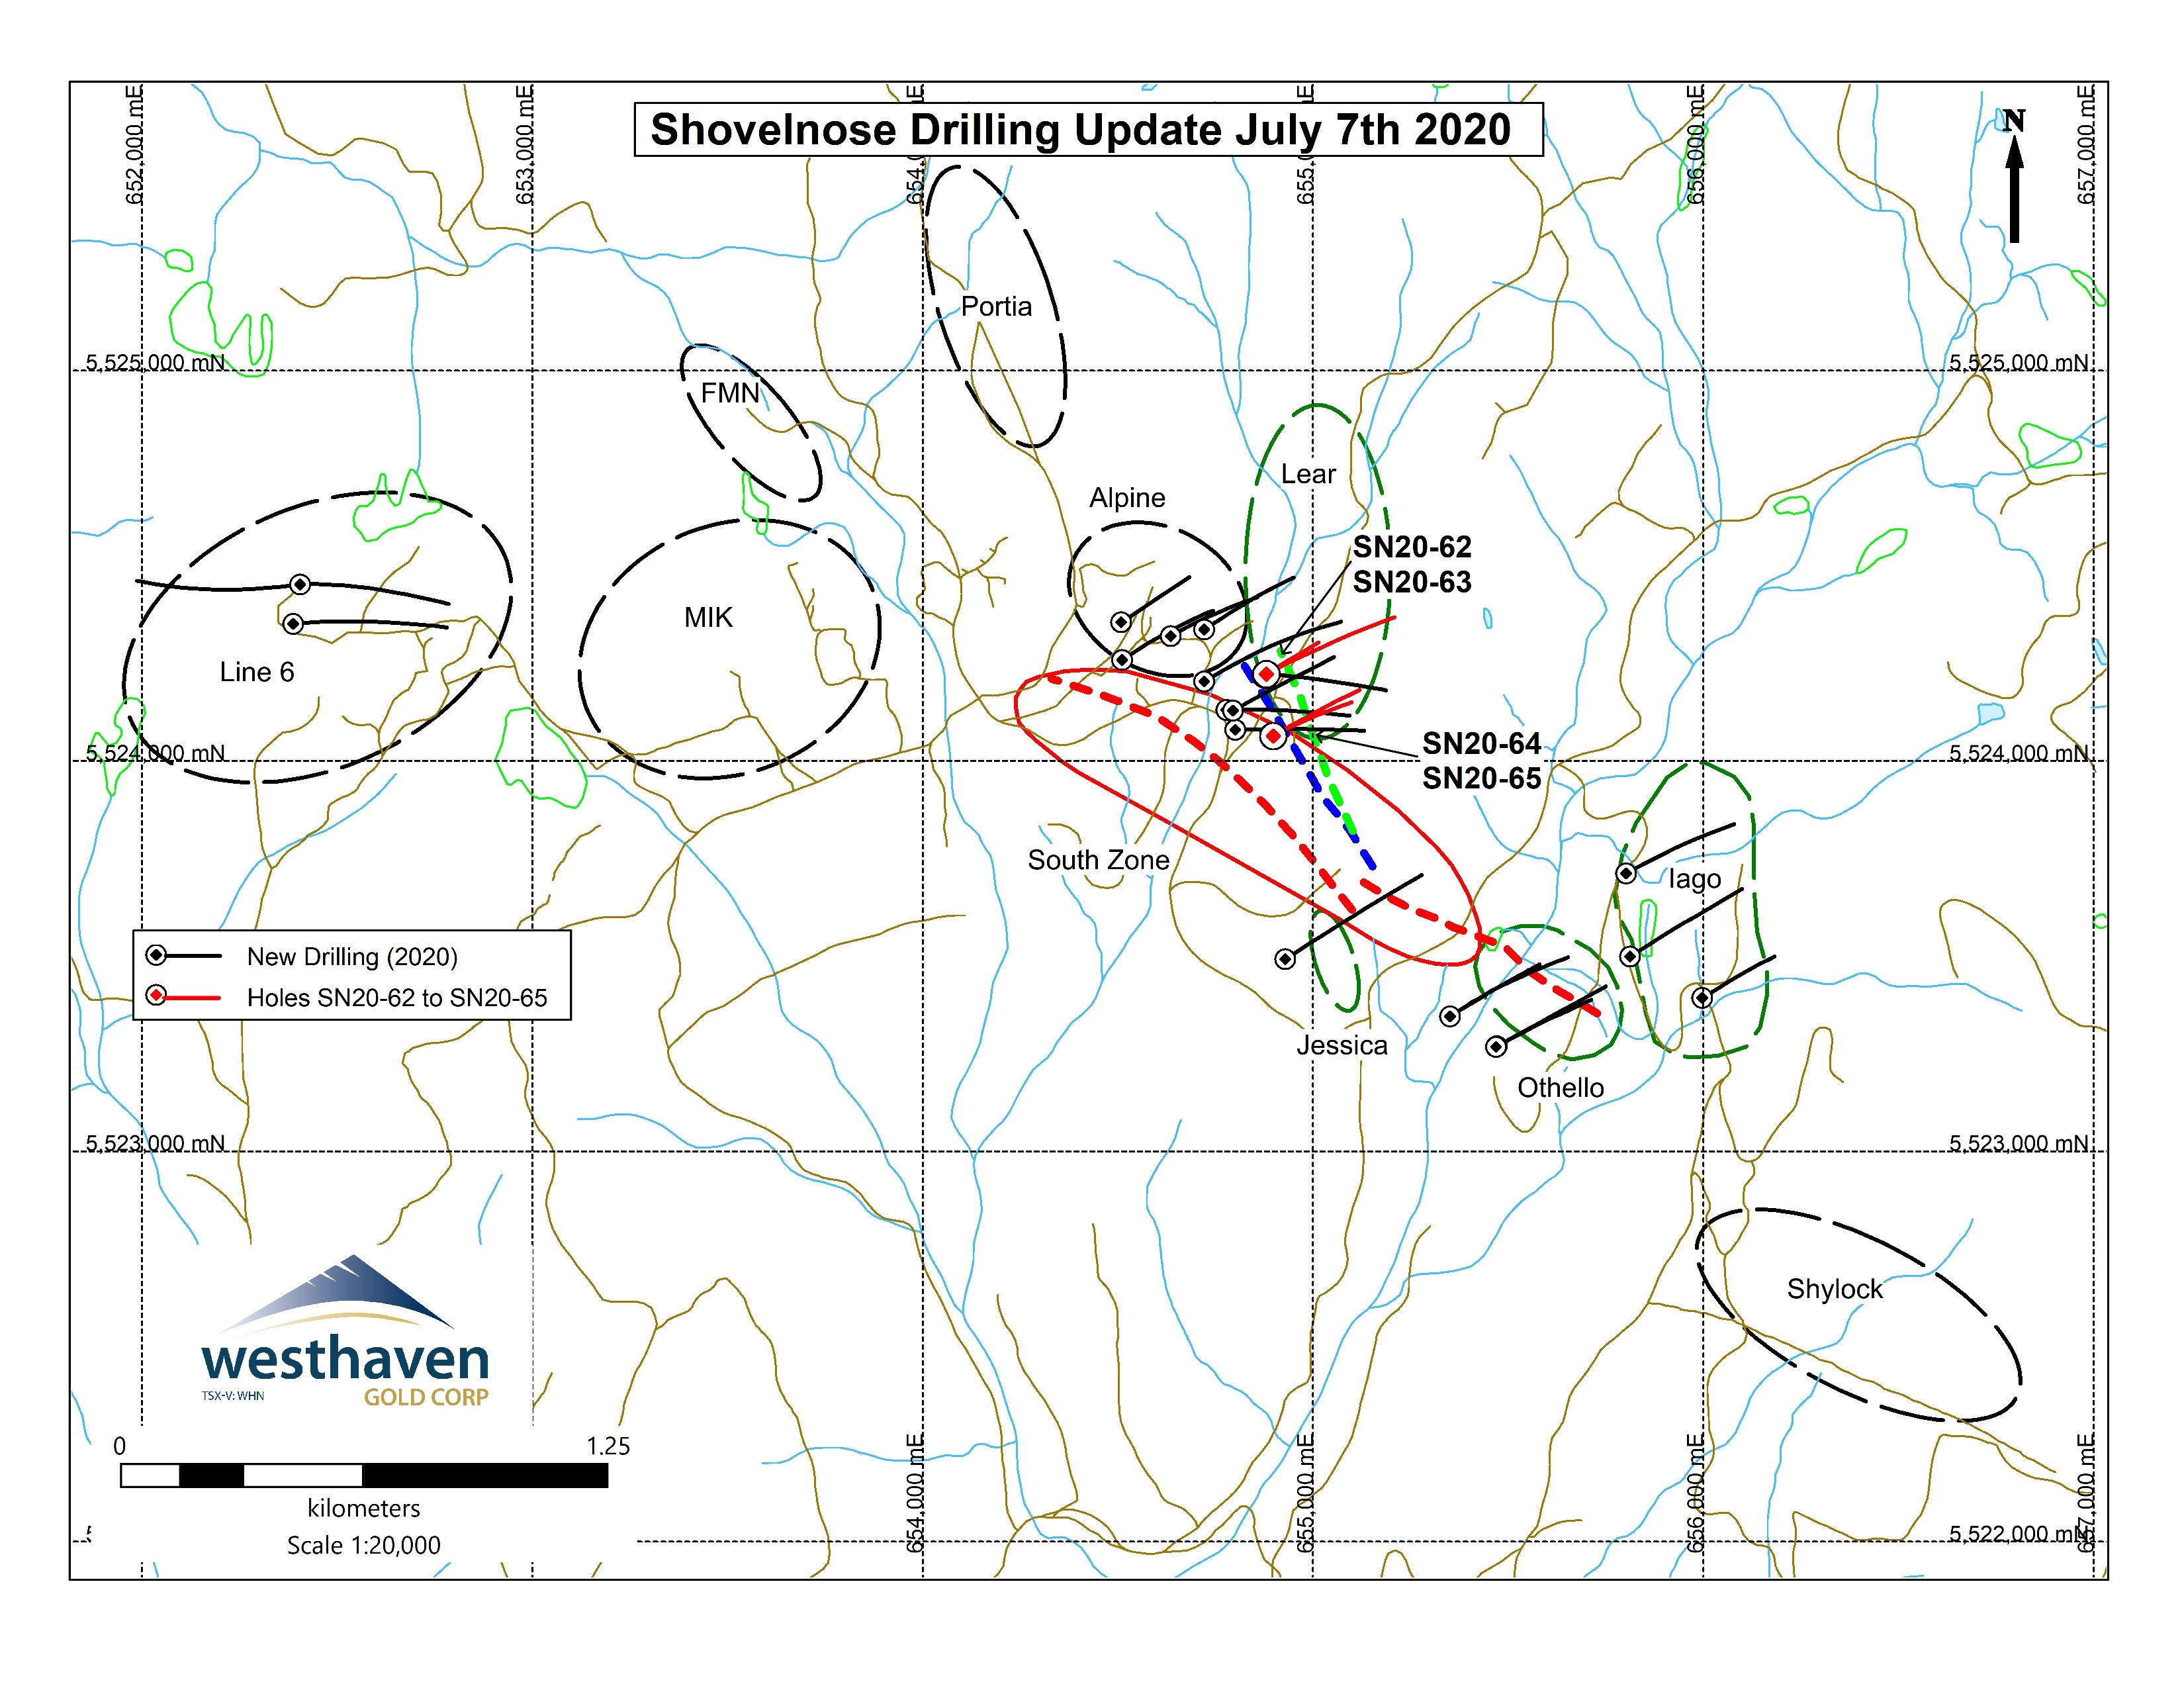 Shovelnose Drilling Update July 7th 2020